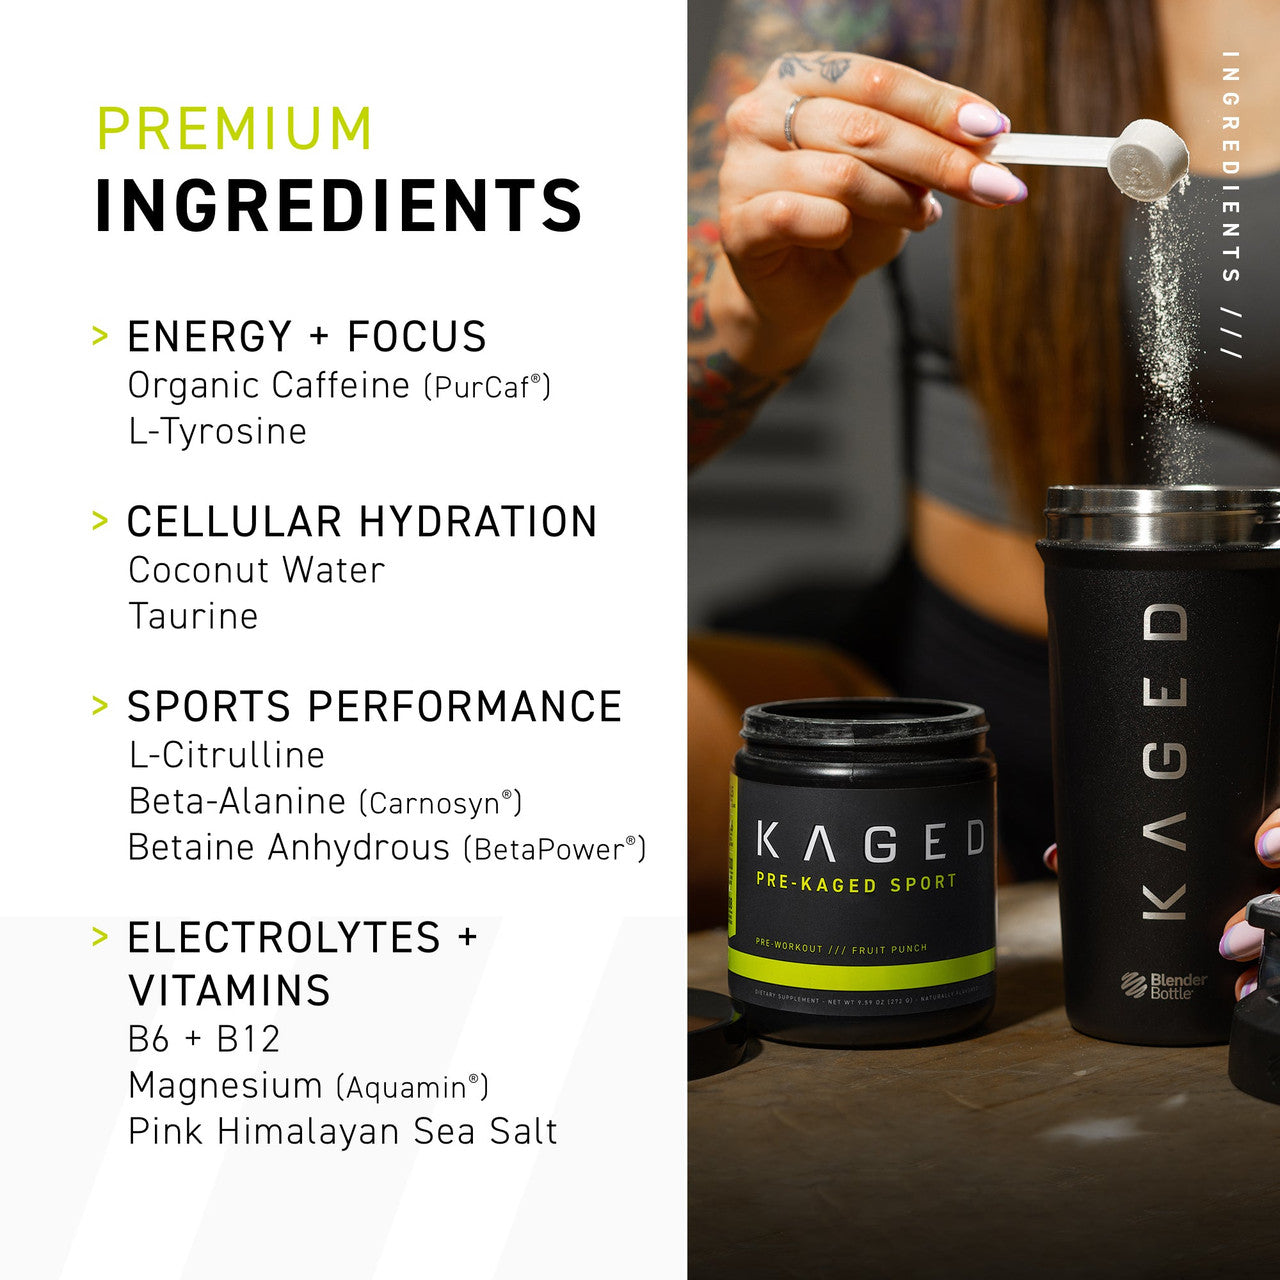 Kaged Muscle Pre-Kaged Sport Premium Ingredients